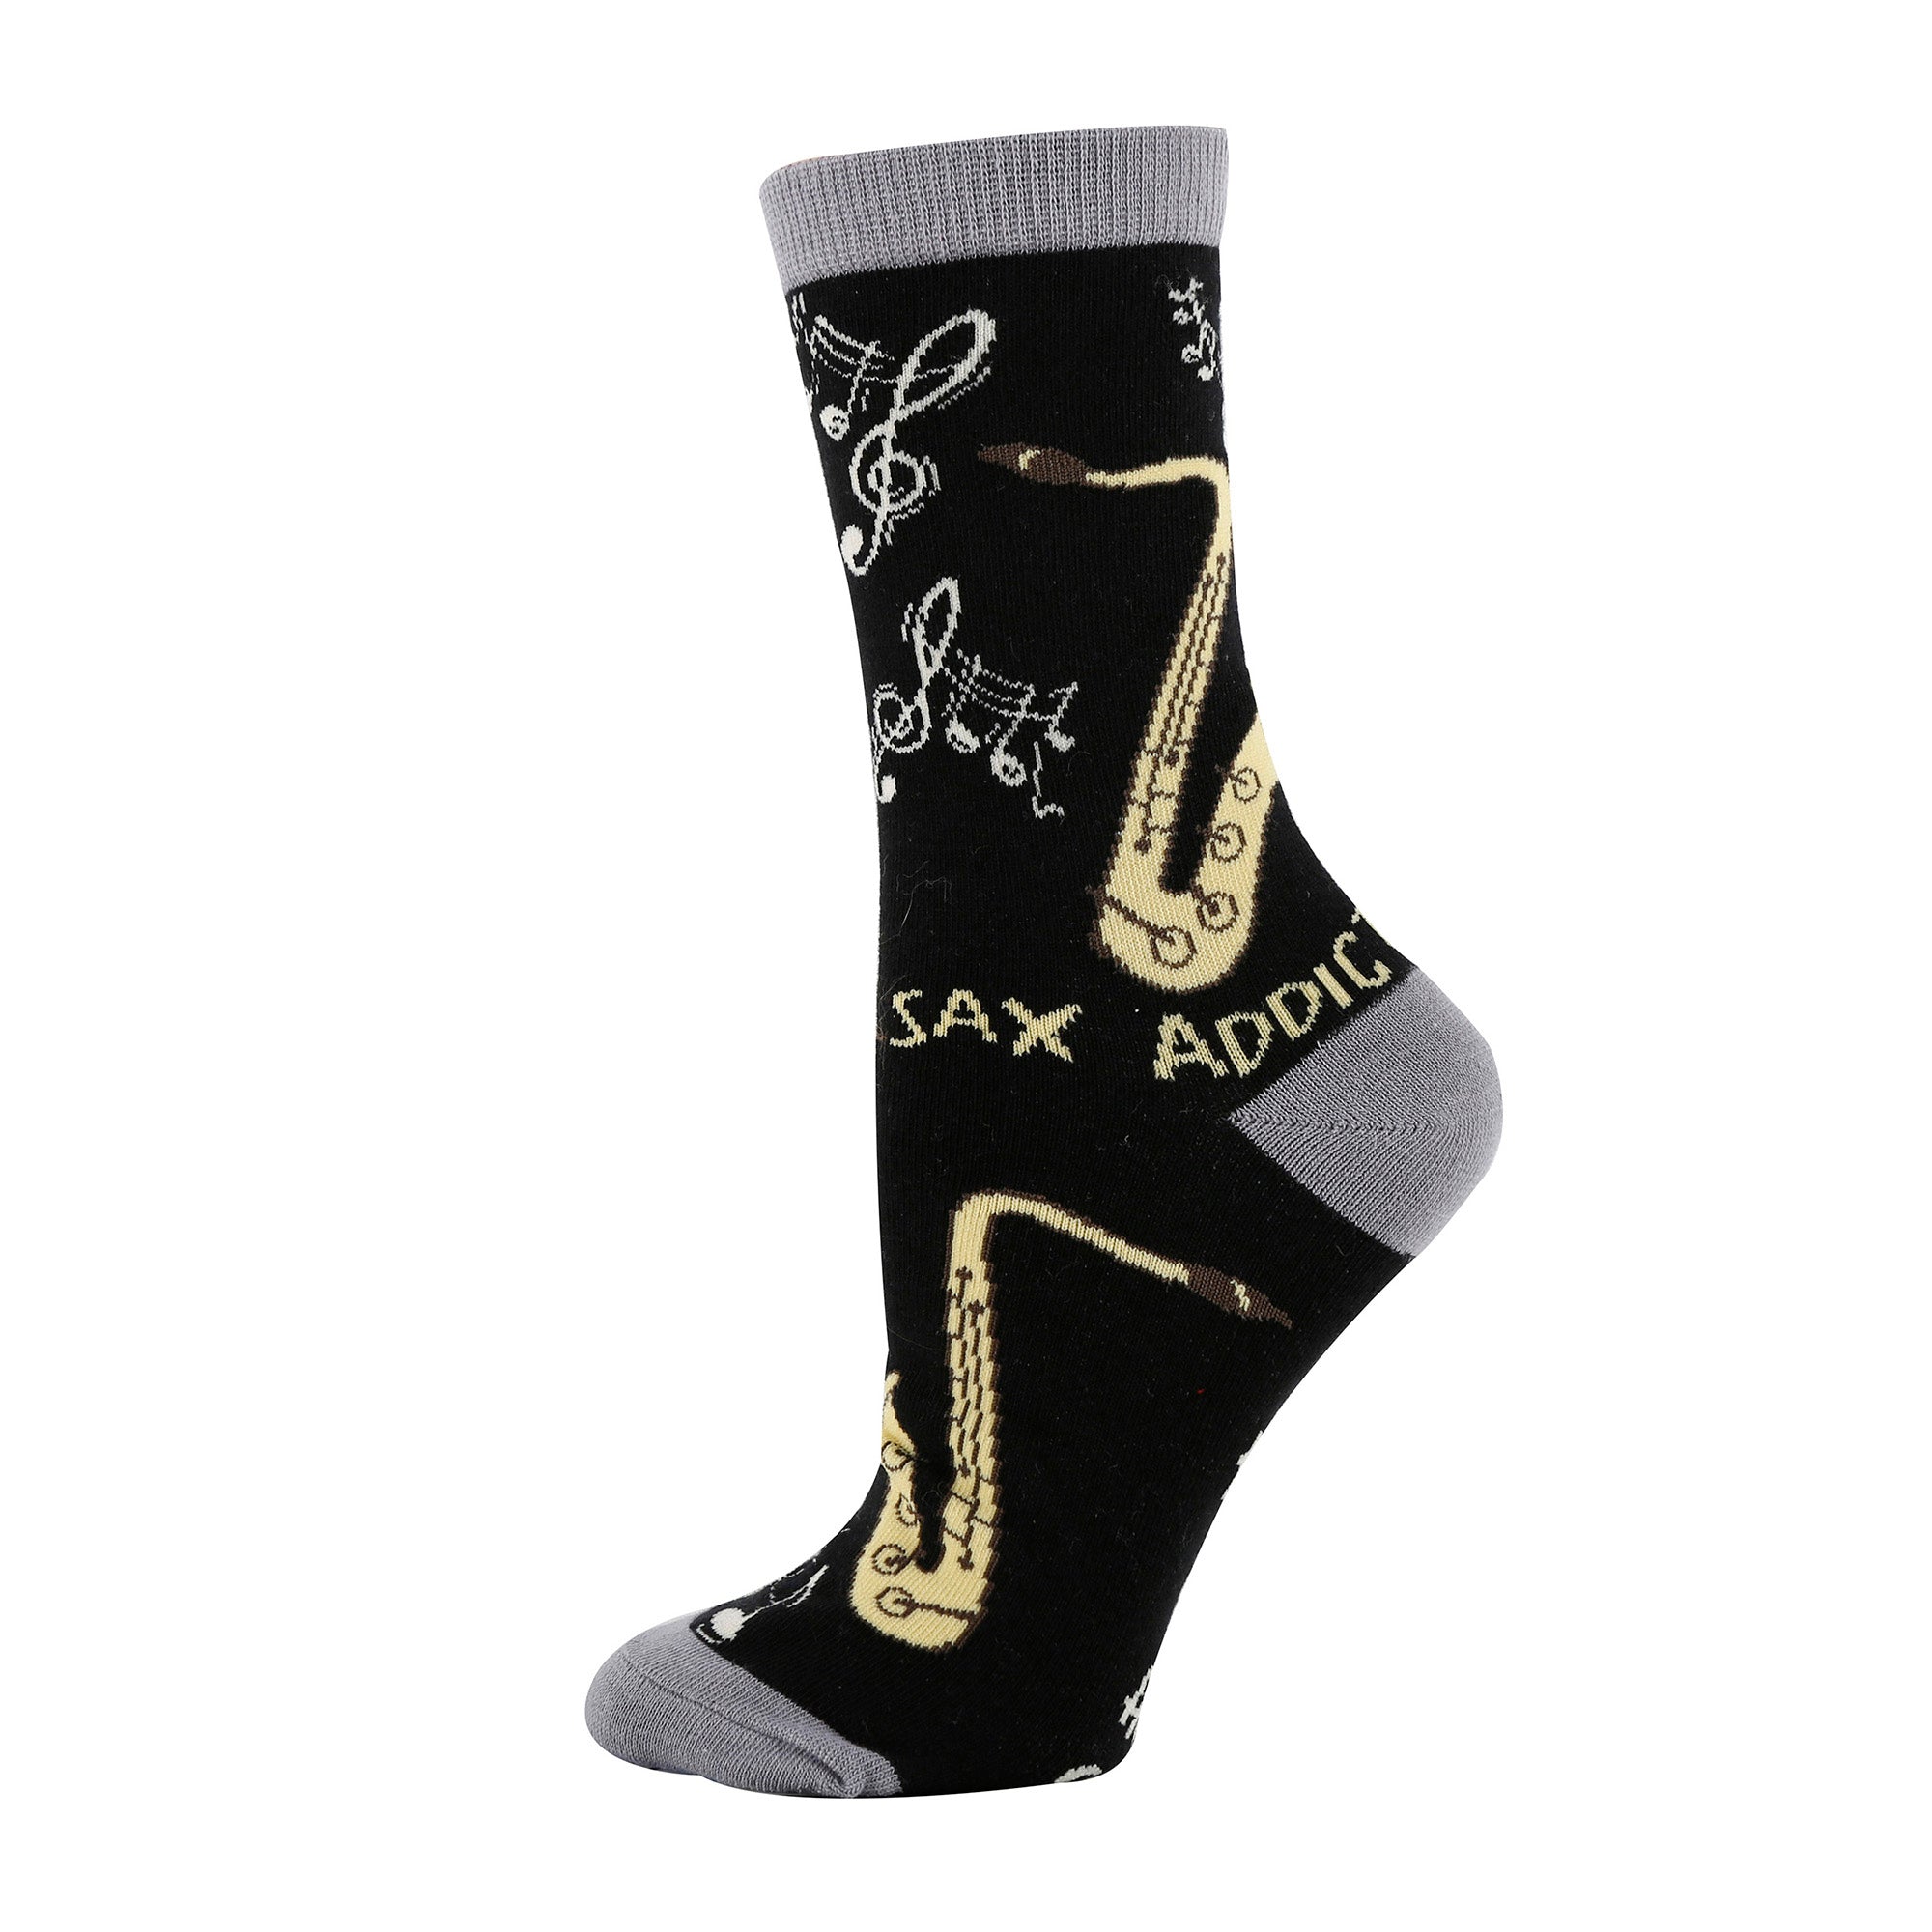 Sax Addict Socks